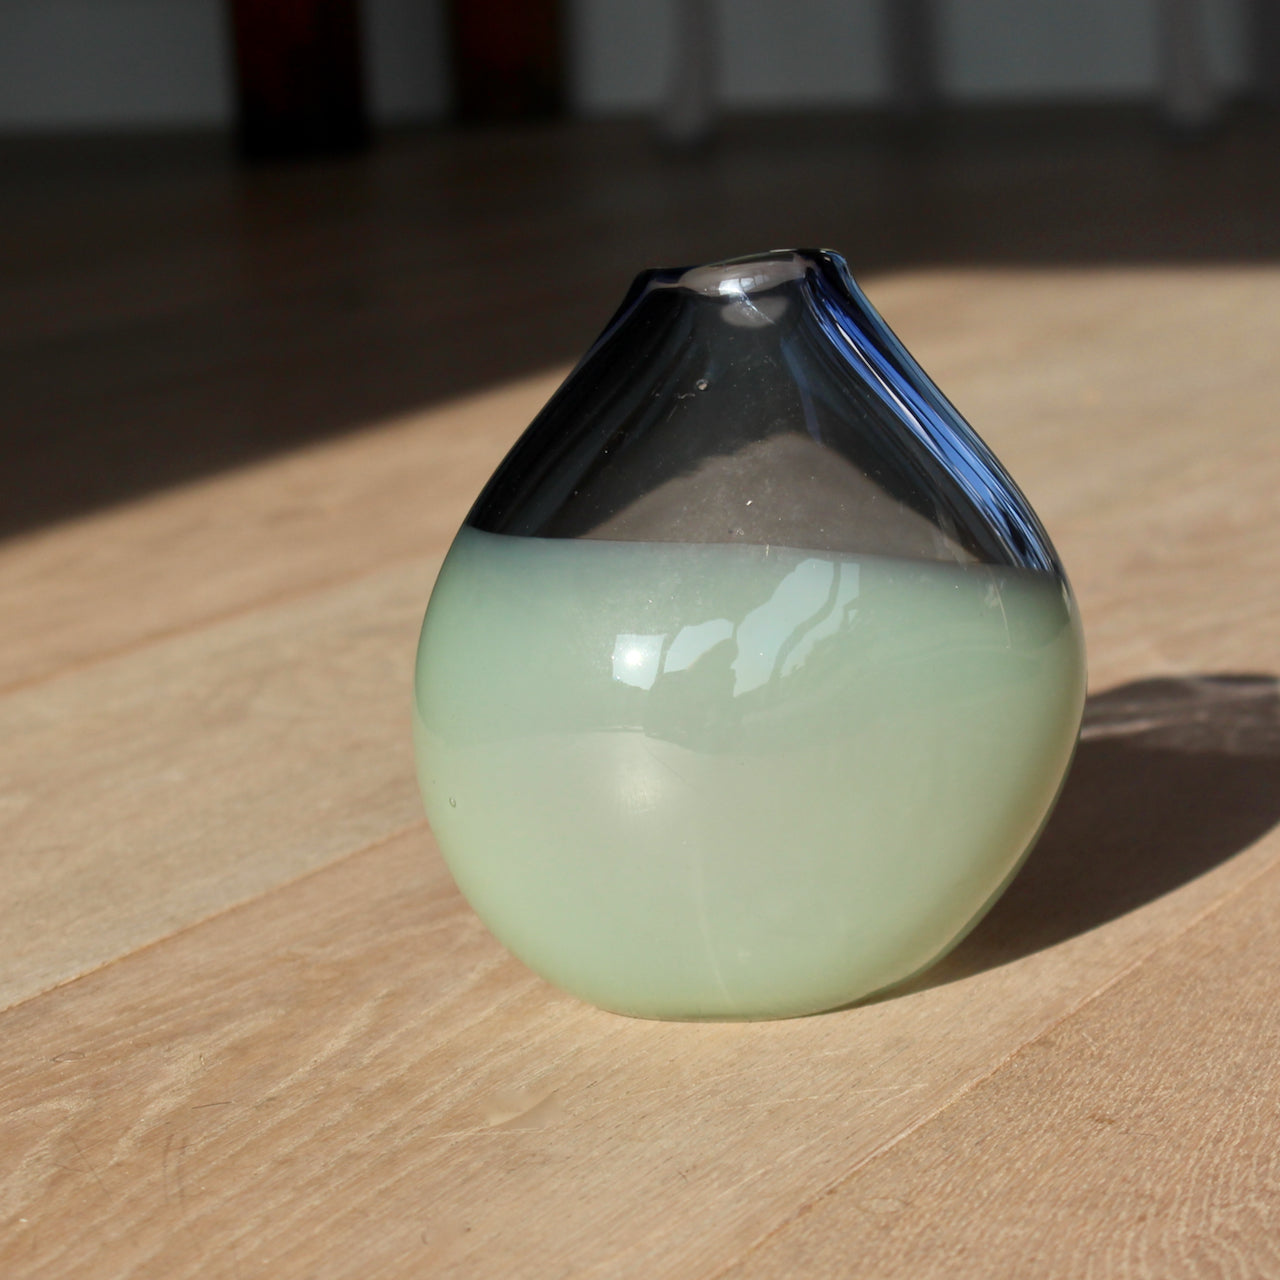 glass artist Michele Oberdieck's small teardrop shaped glass vessel in dark blue and pale green.